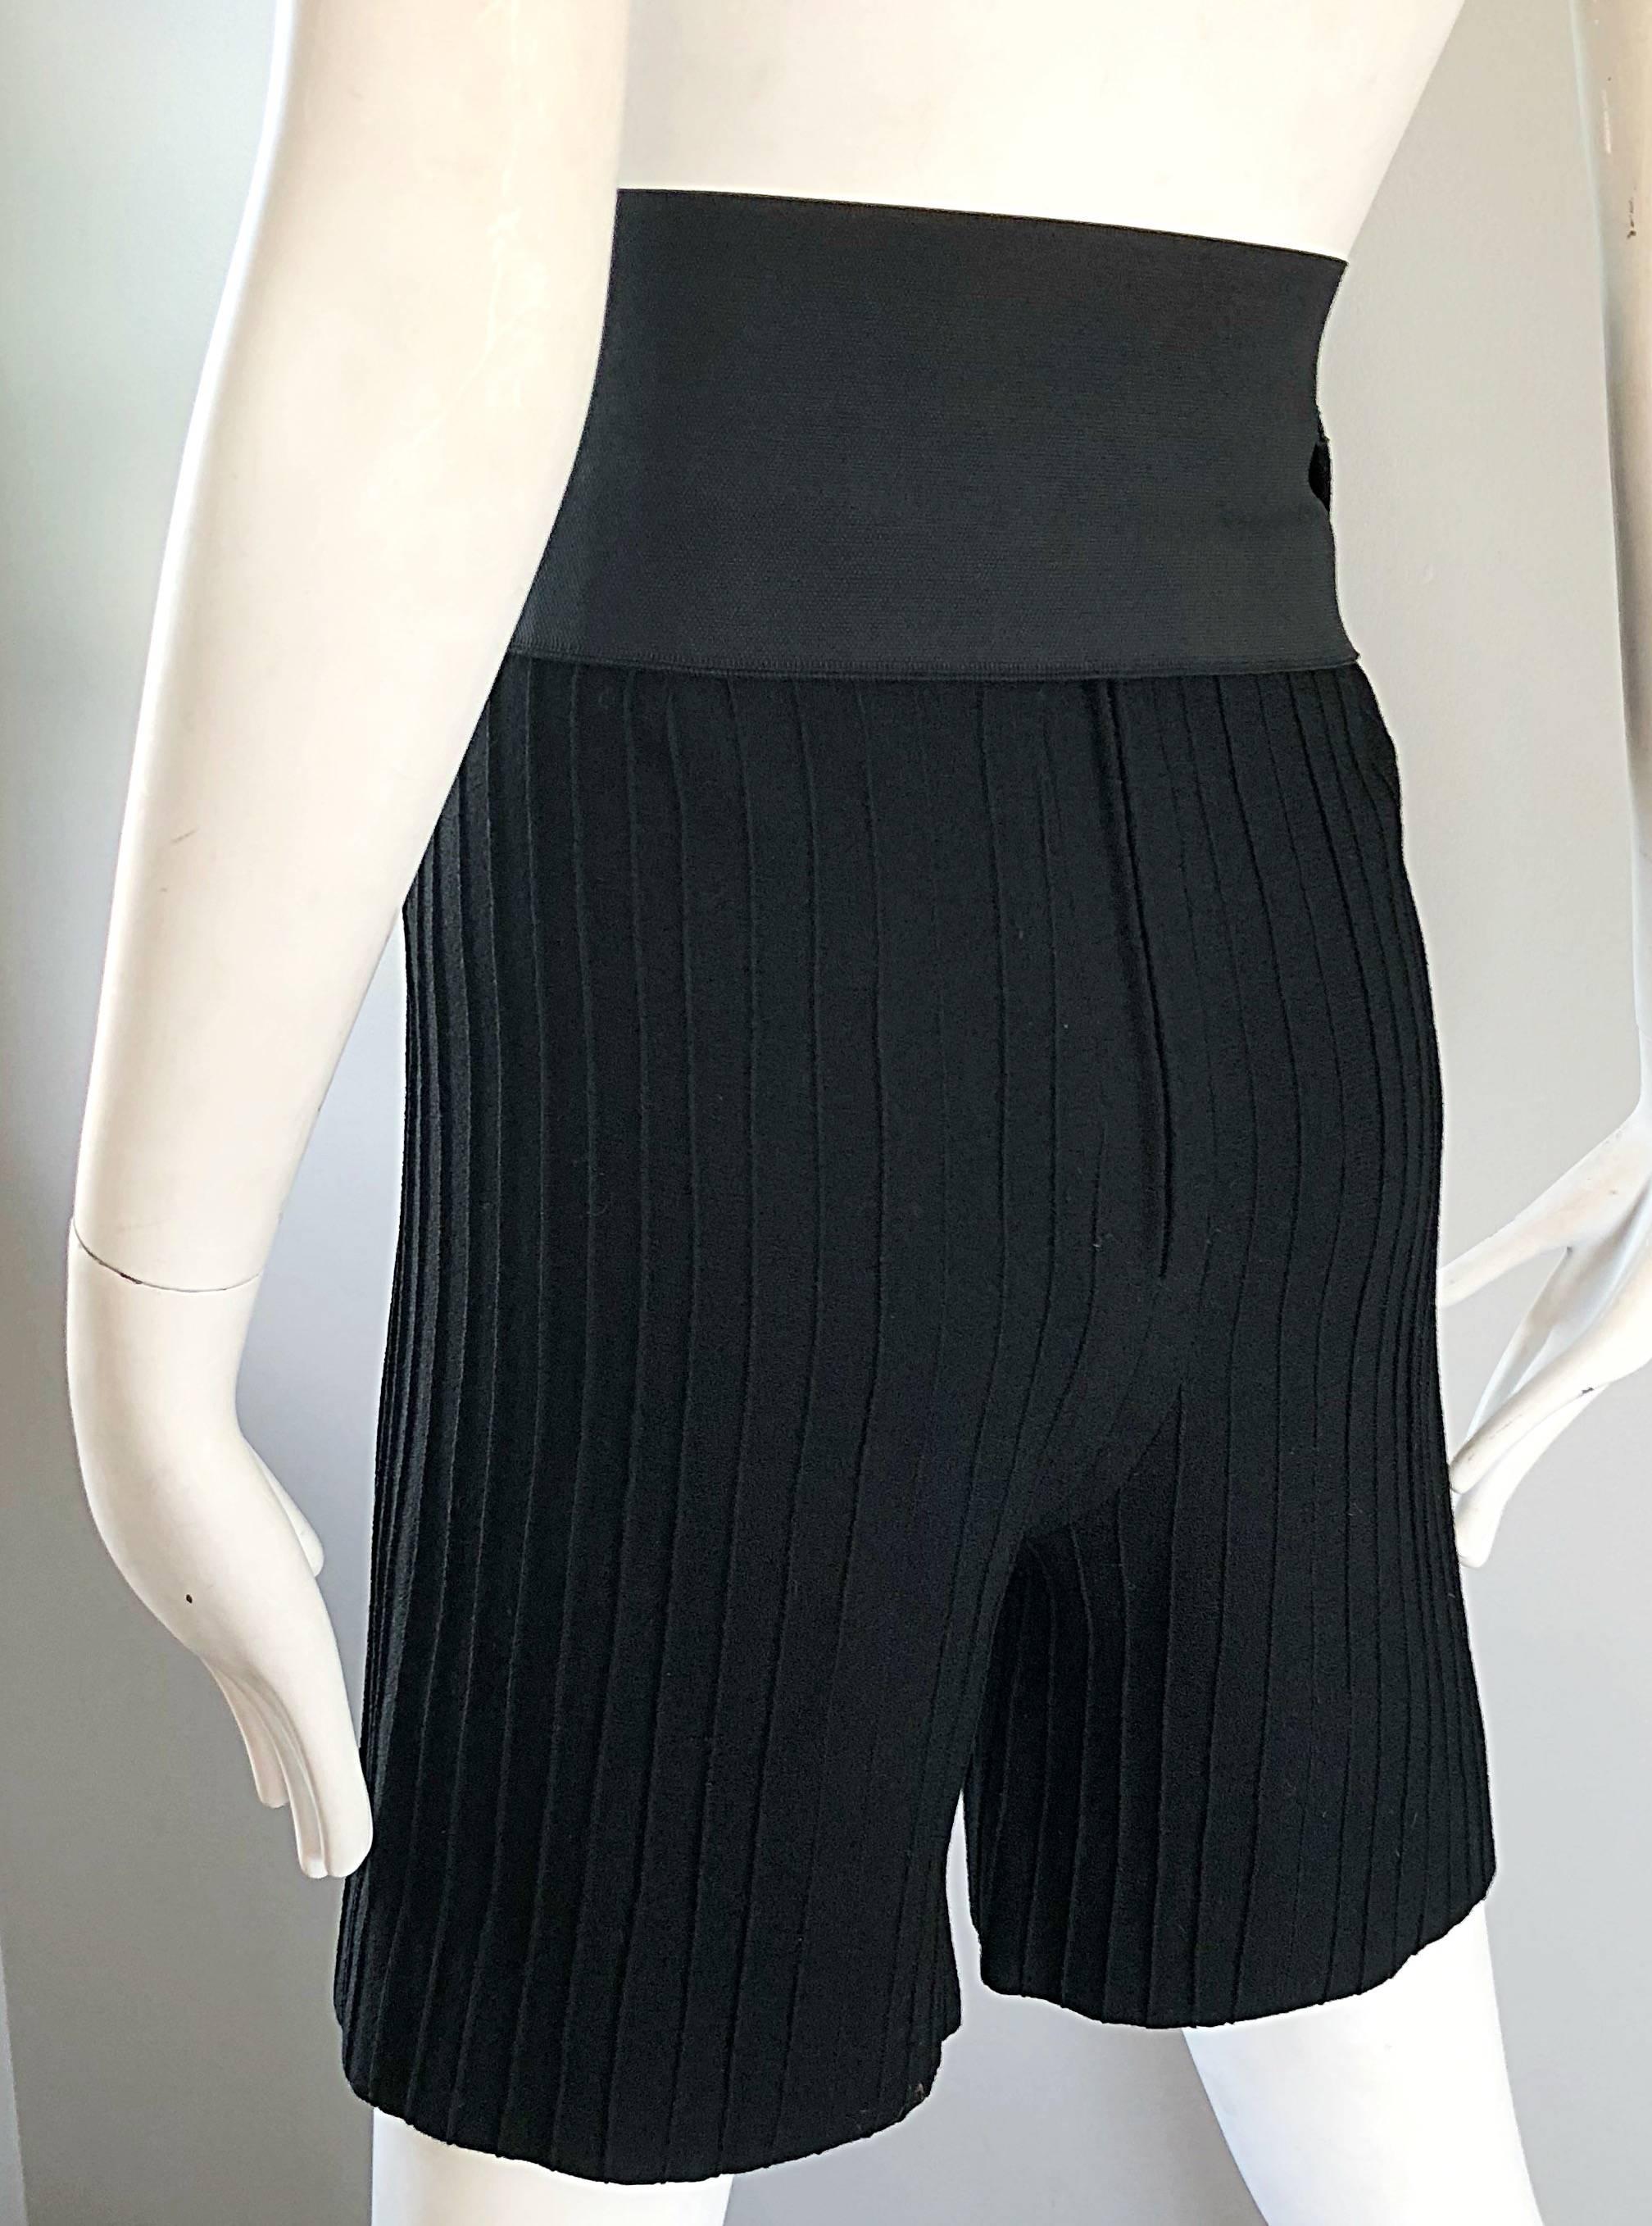 Cardinali Original Sample Black Wool High Waisted 1960s Shorts and Belt Set For Sale 6